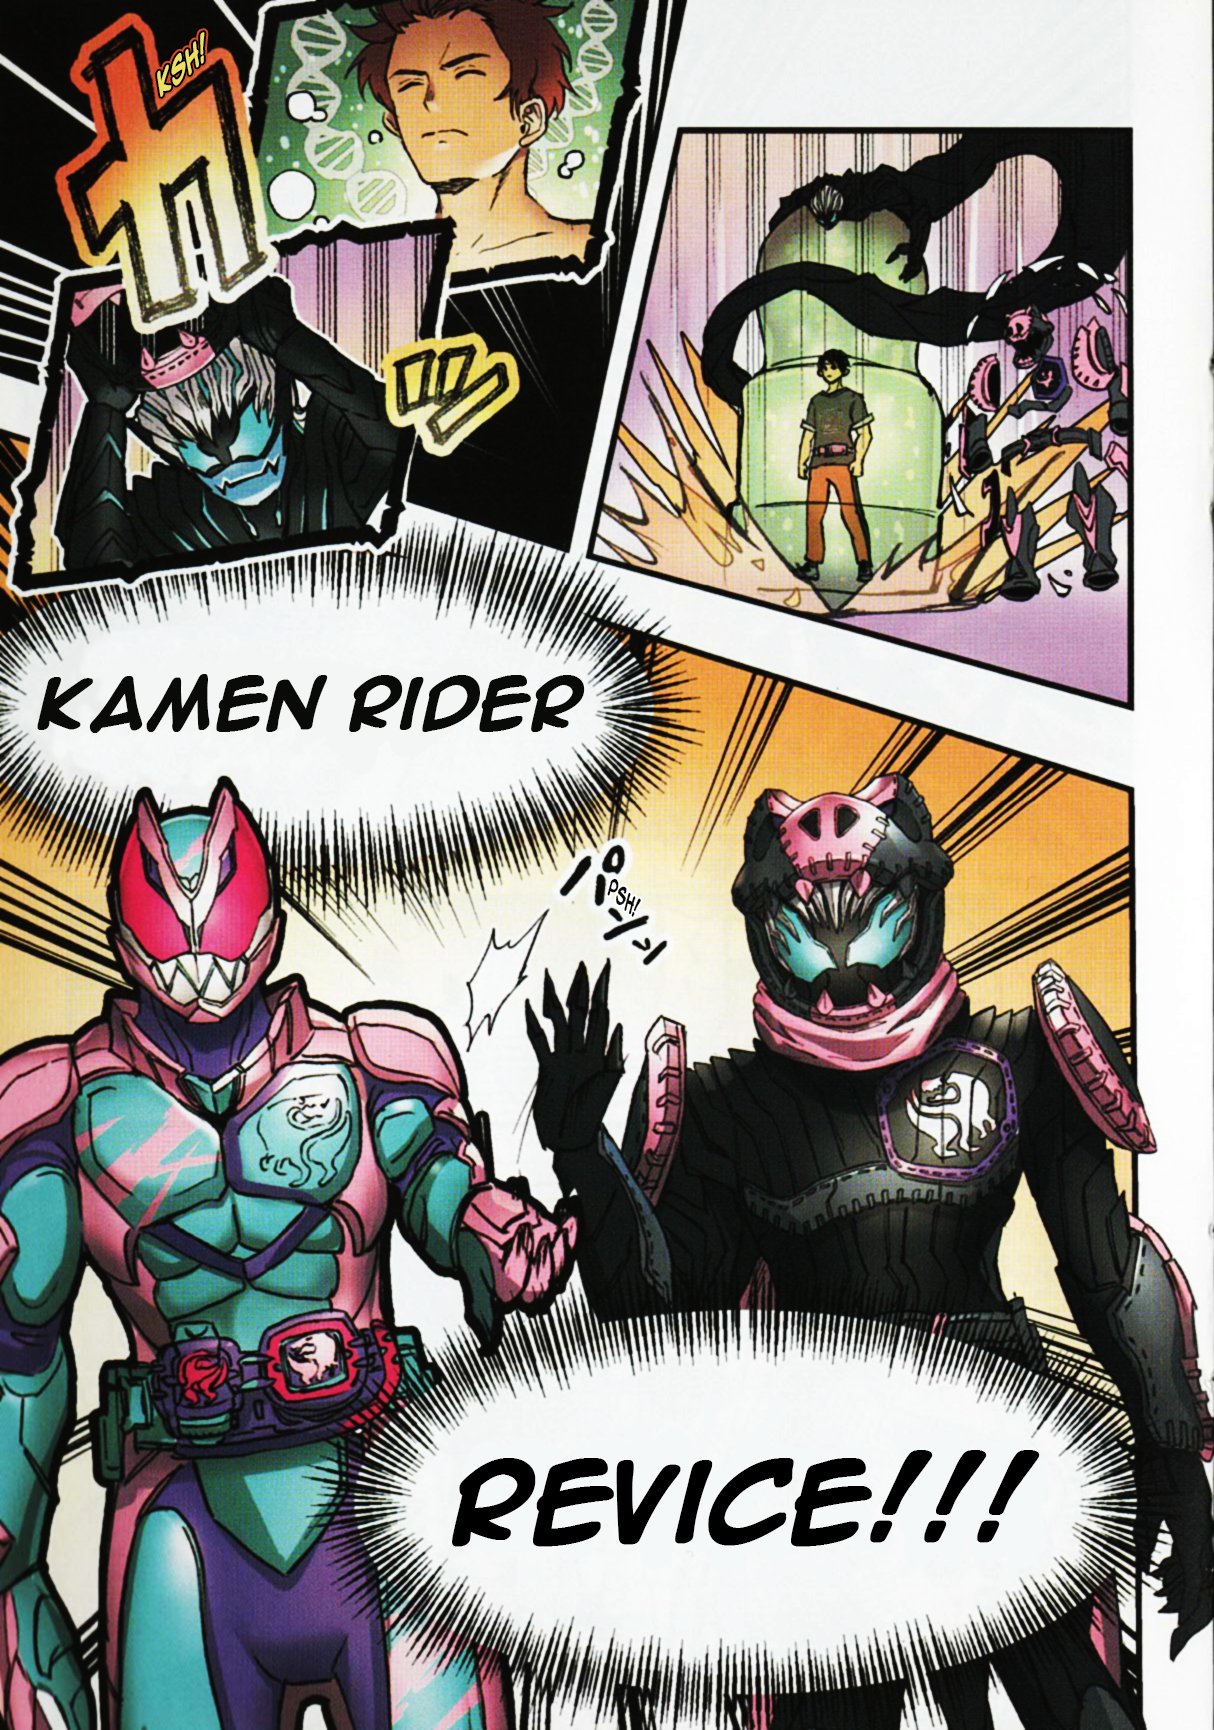 Kamen rider revice episode 3 sub indo